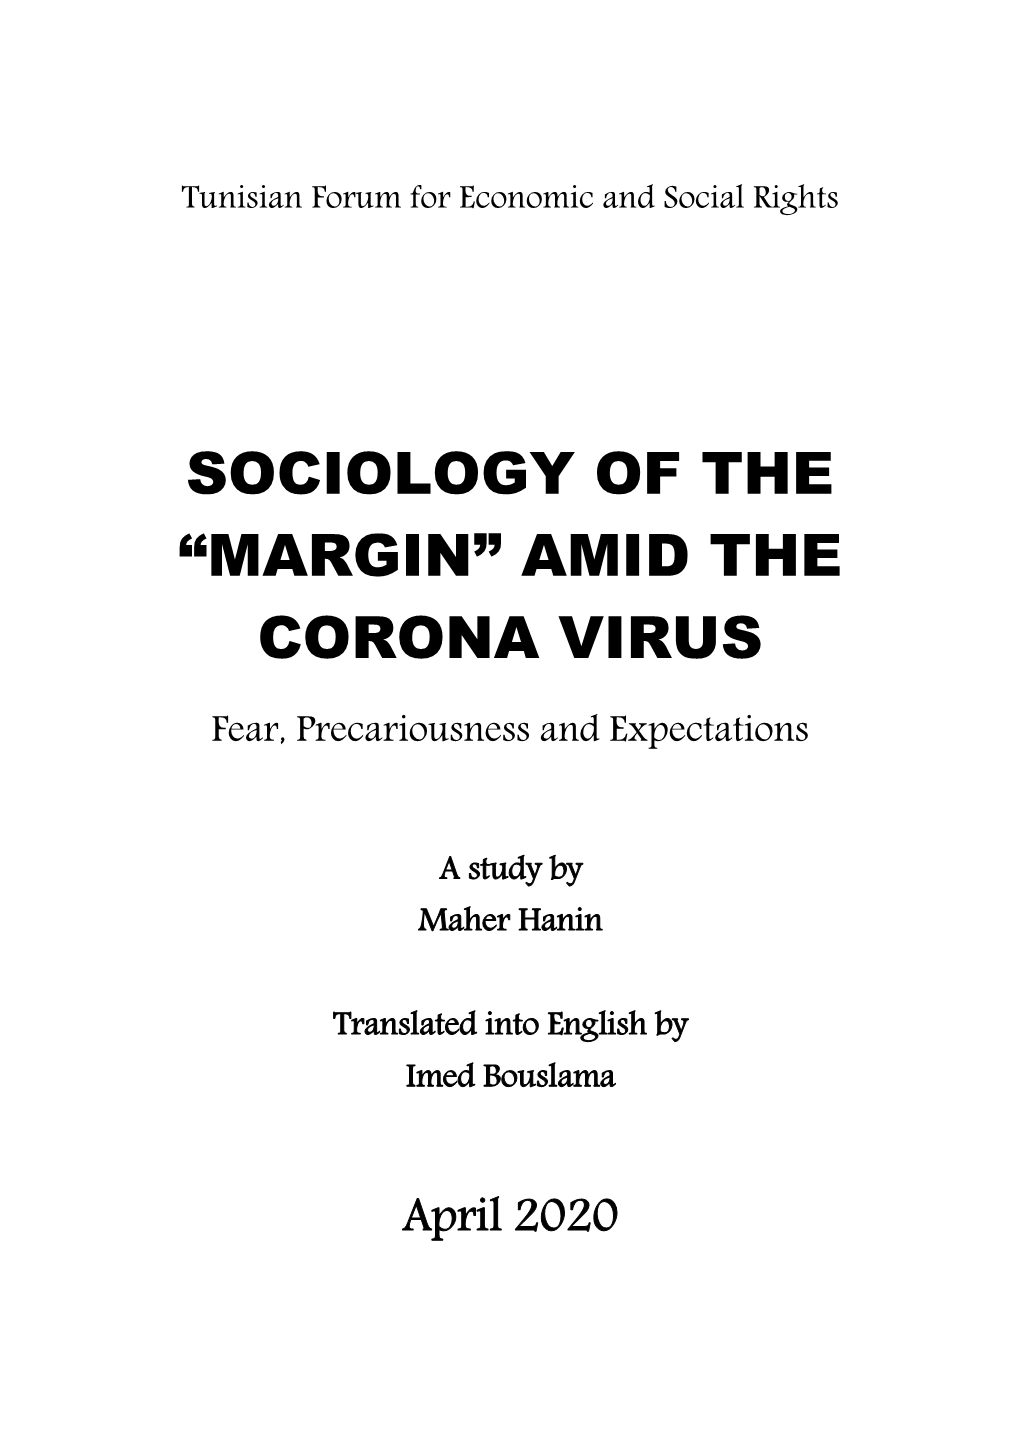 Sociology of the “Margin” Amid the Corona Virus